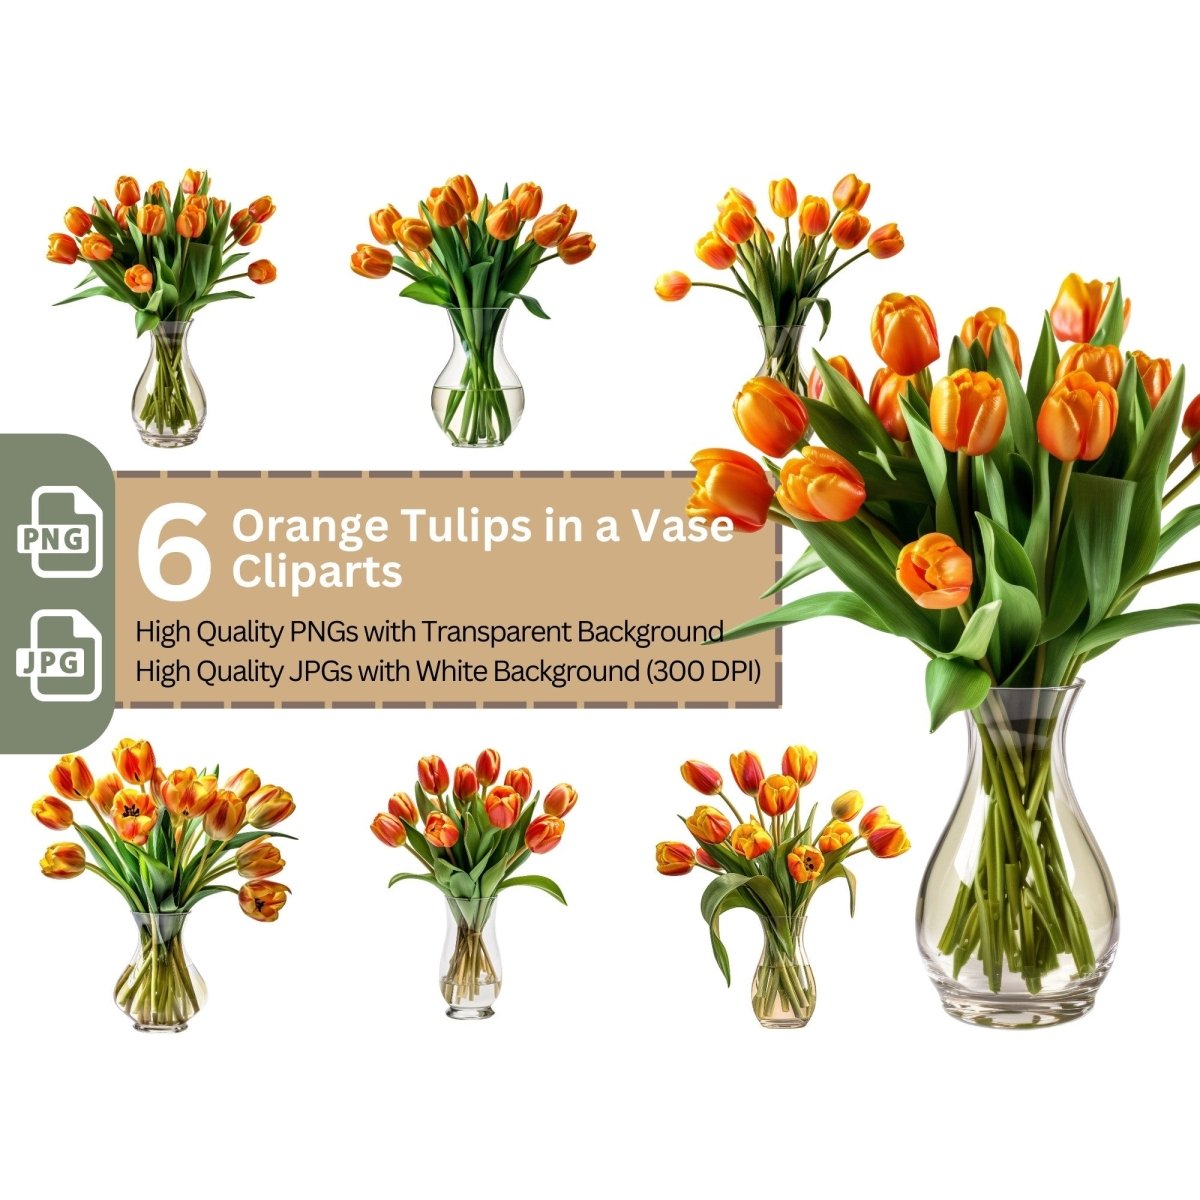 Orange Tulips in Vase 6+6 PNG Clipart Bundle, Transparent Background, Photorealistic - Everything Pixel